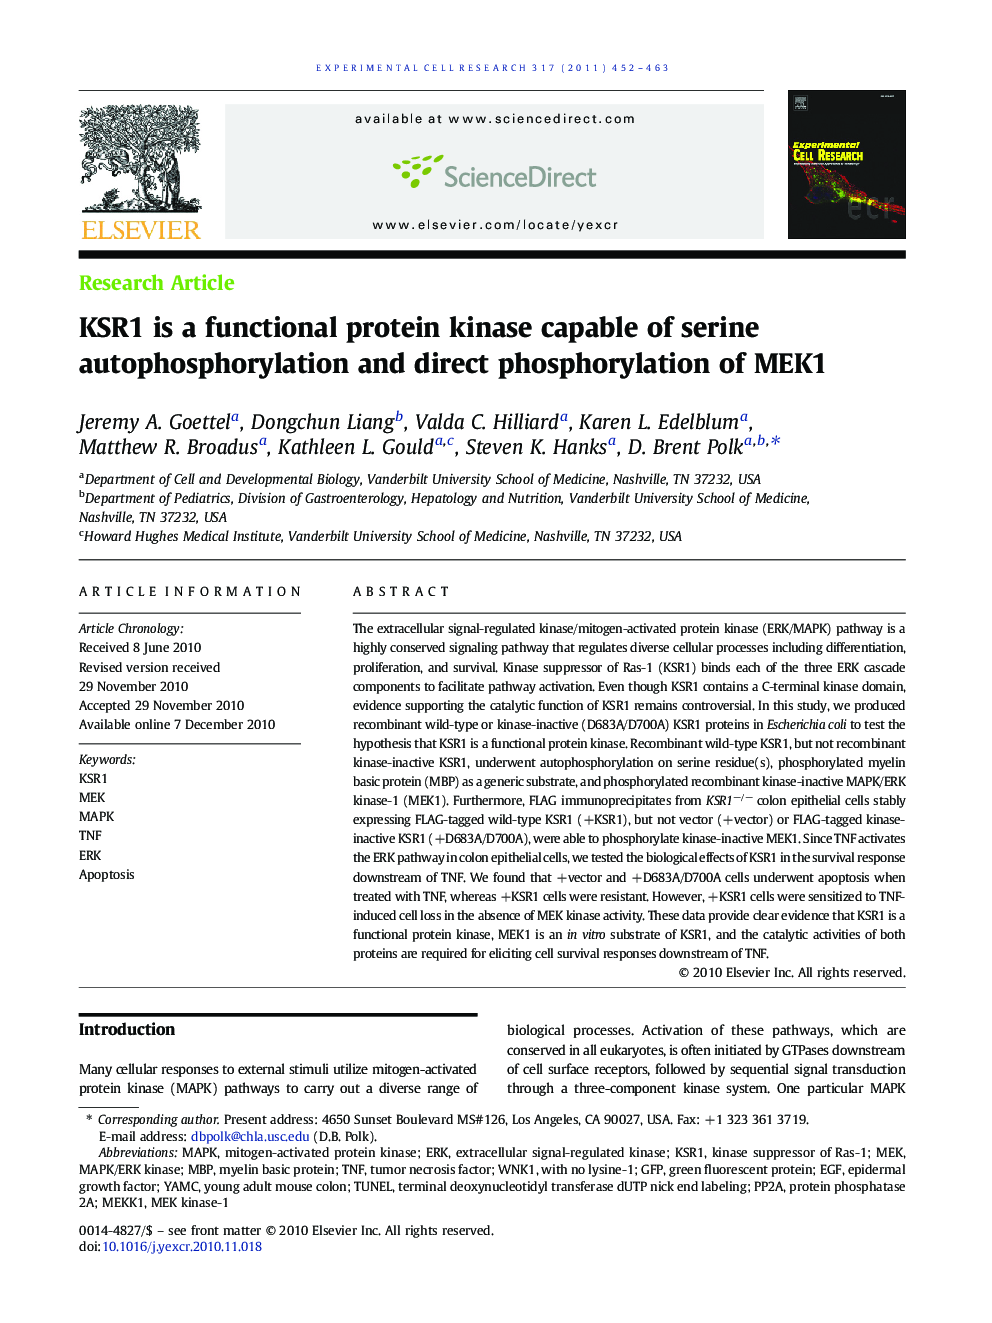 KSR1 is a functional protein kinase capable of serine autophosphorylation and direct phosphorylation of MEK1